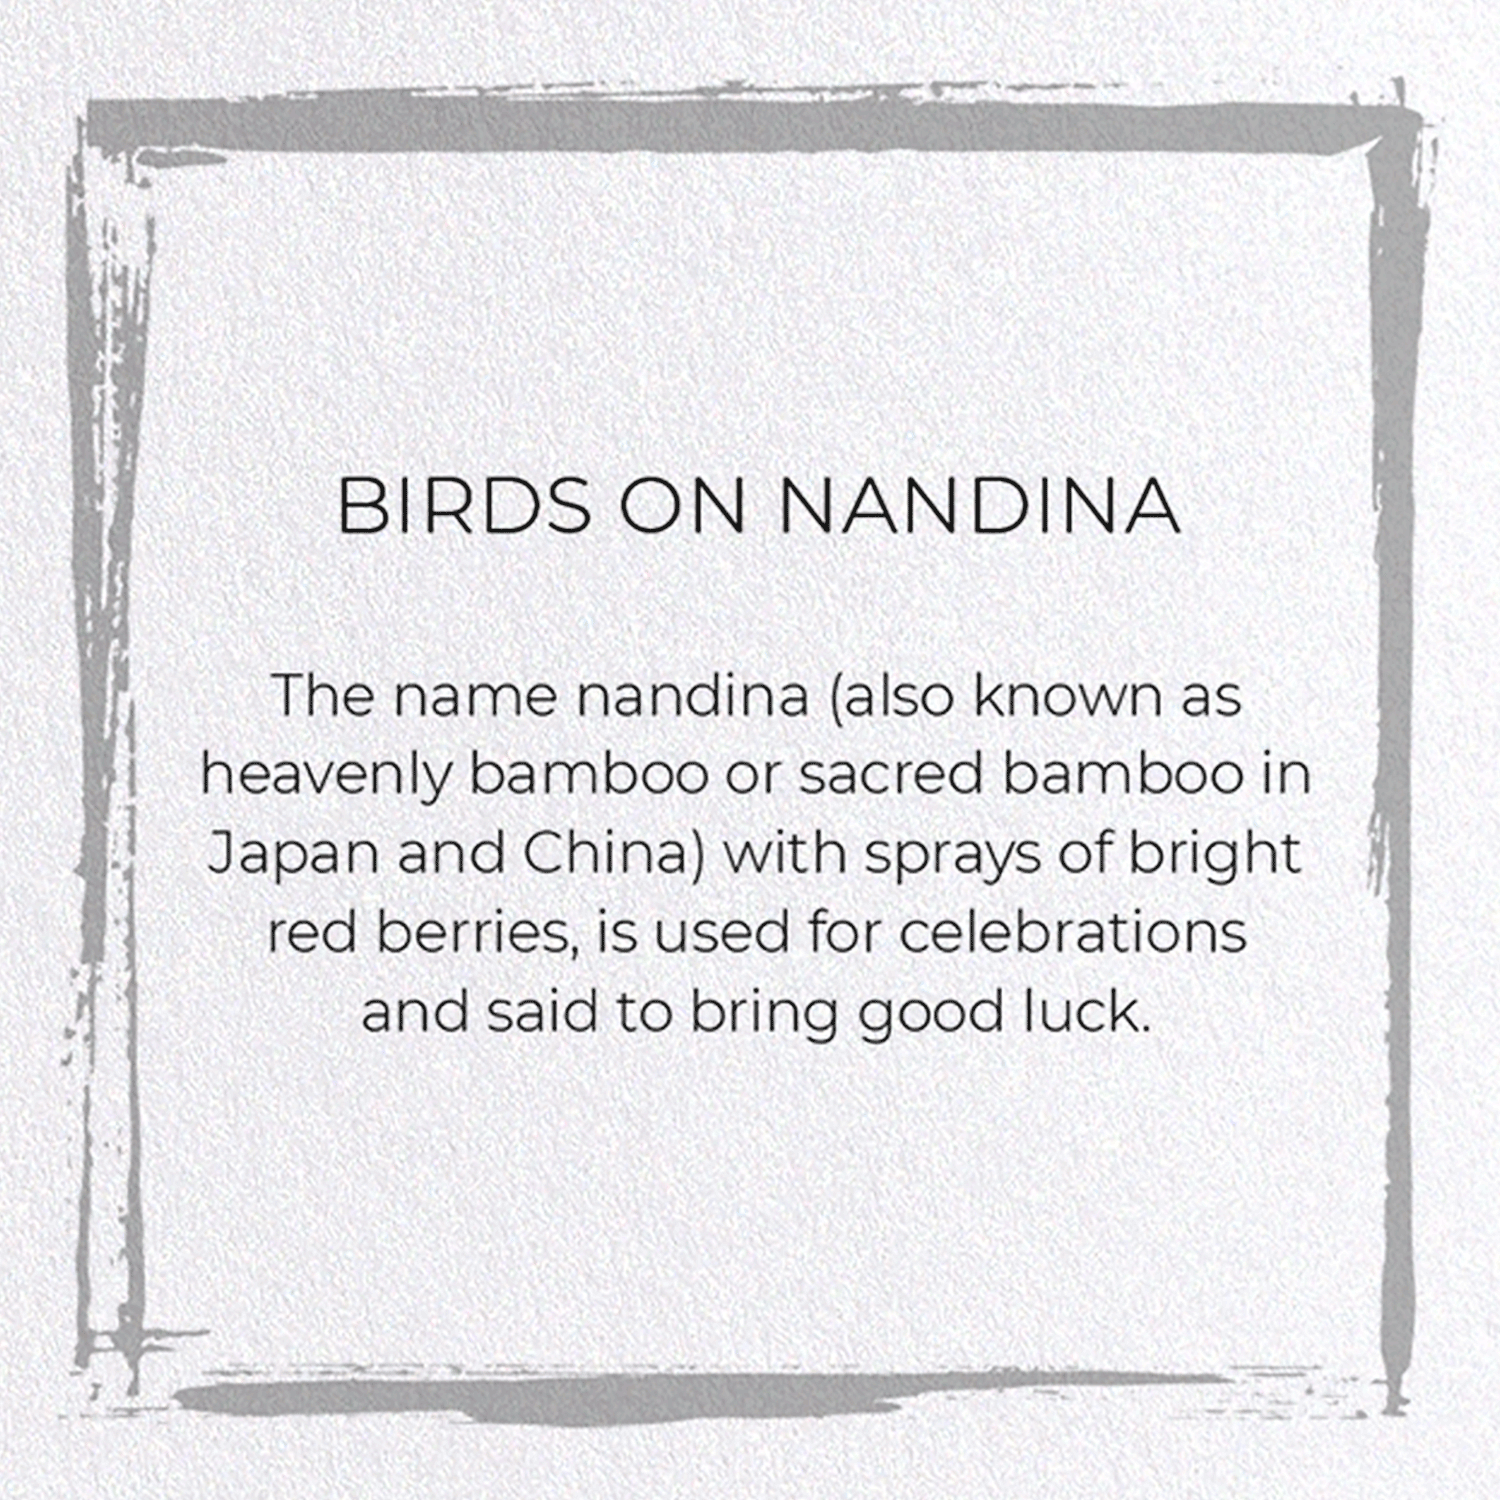 BIRDS ON NANDINA